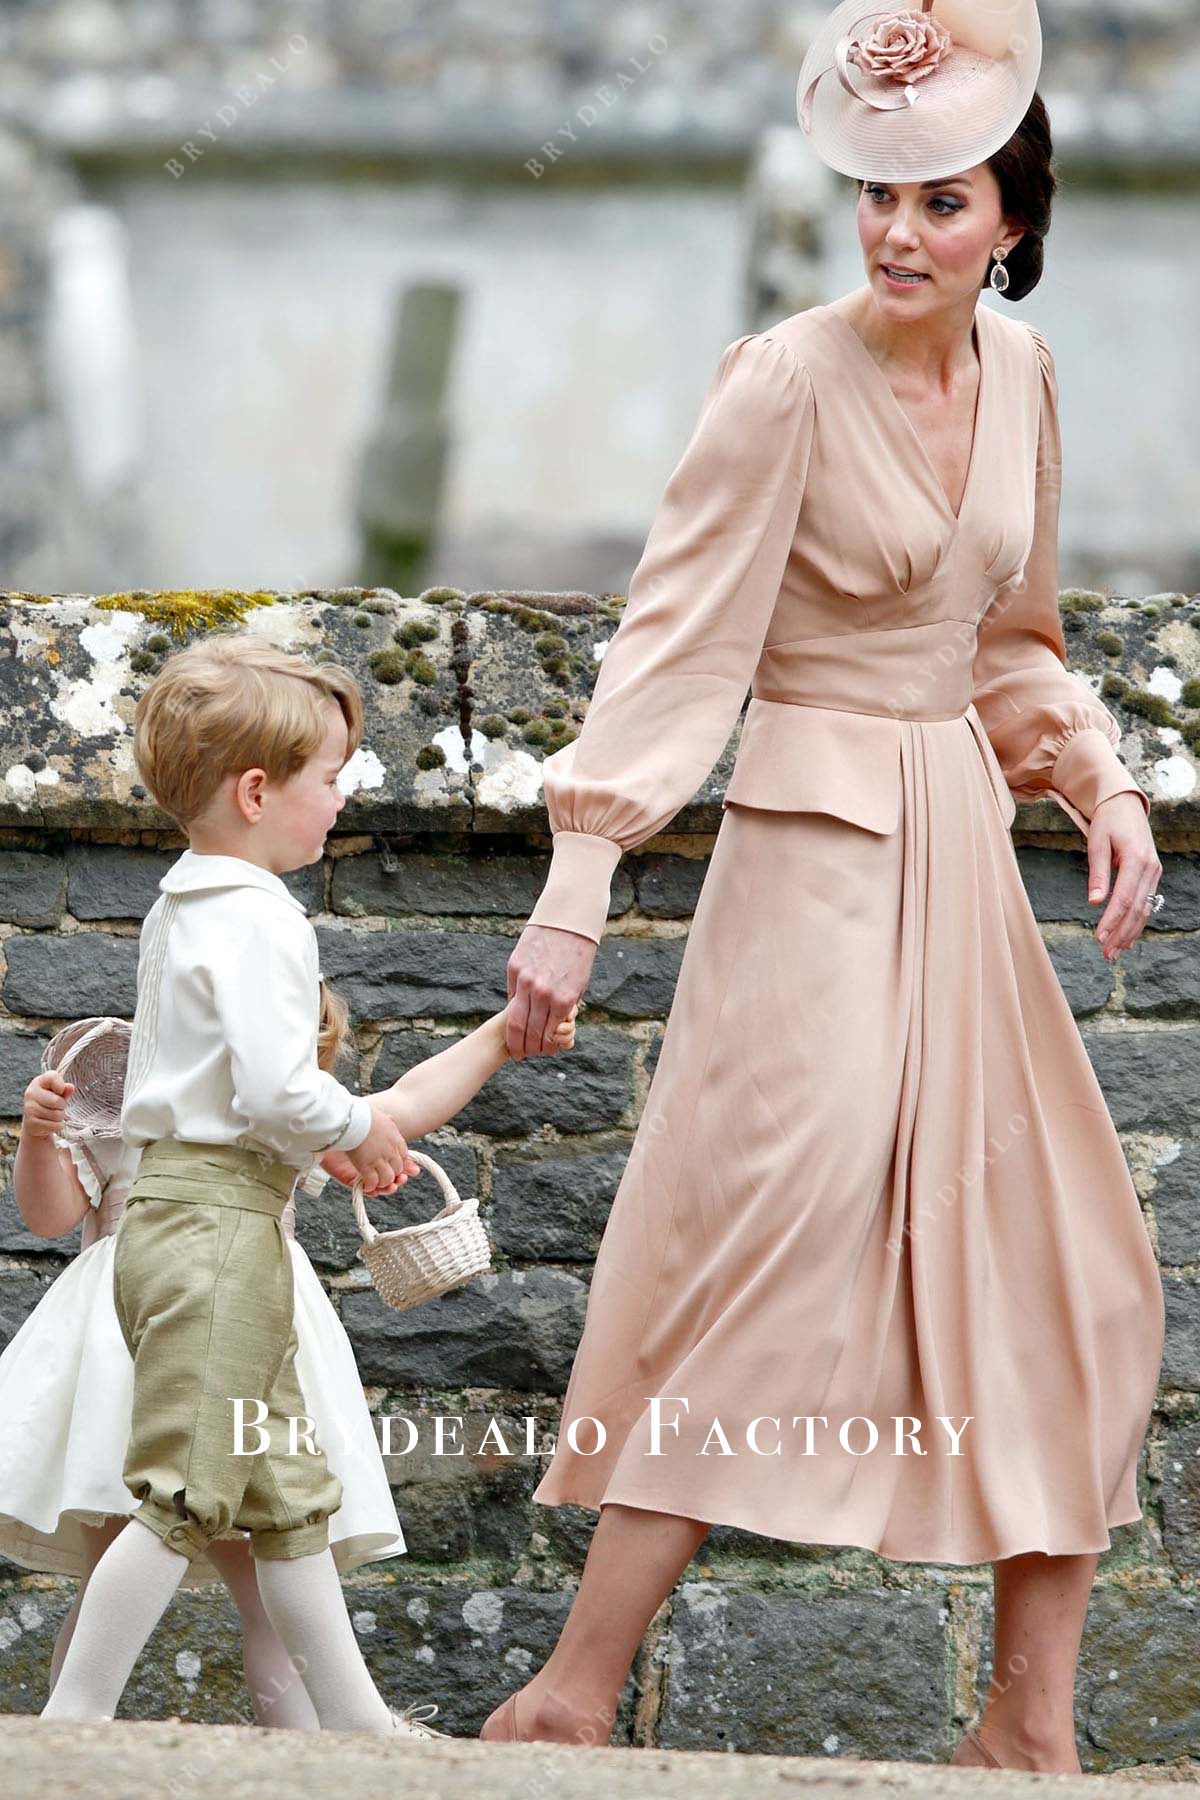 Kate Middleton Dusty Rose Dress on  Sister Pippa's Wedding 2017